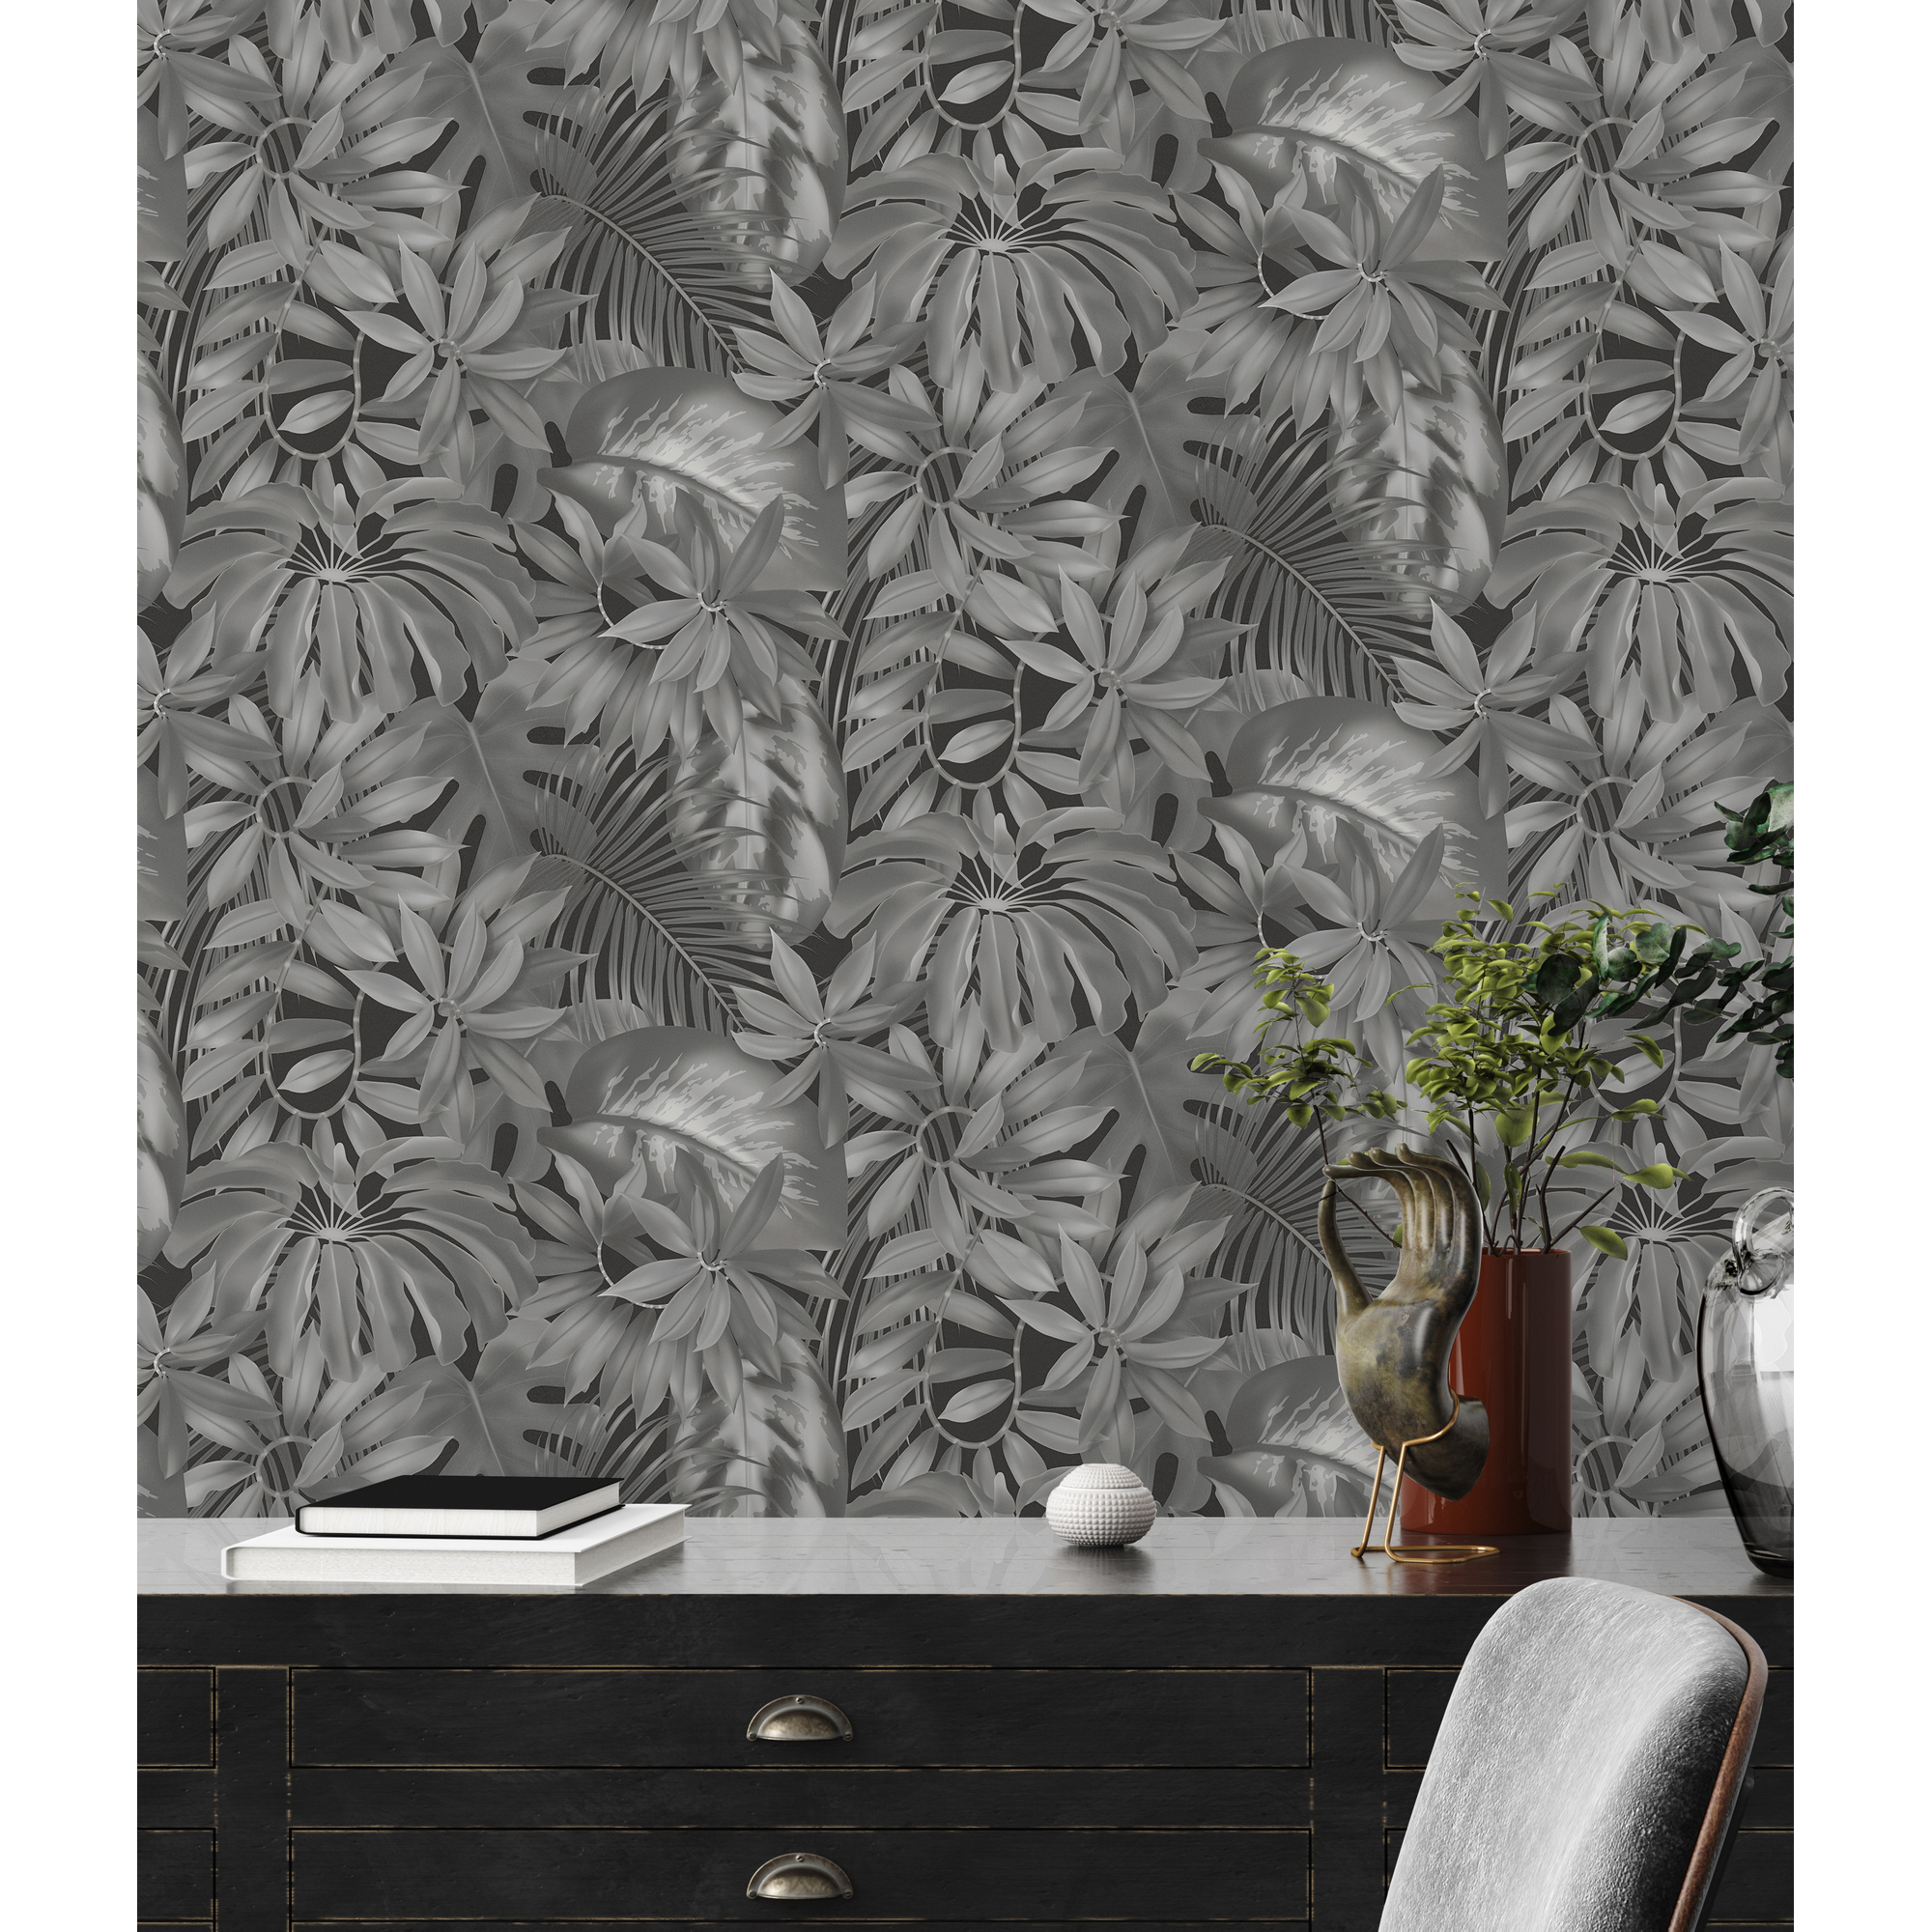 Vliestapete 'Pint Walls' Dschungel grau/schwarz 10,05 x 0,53 m + product picture